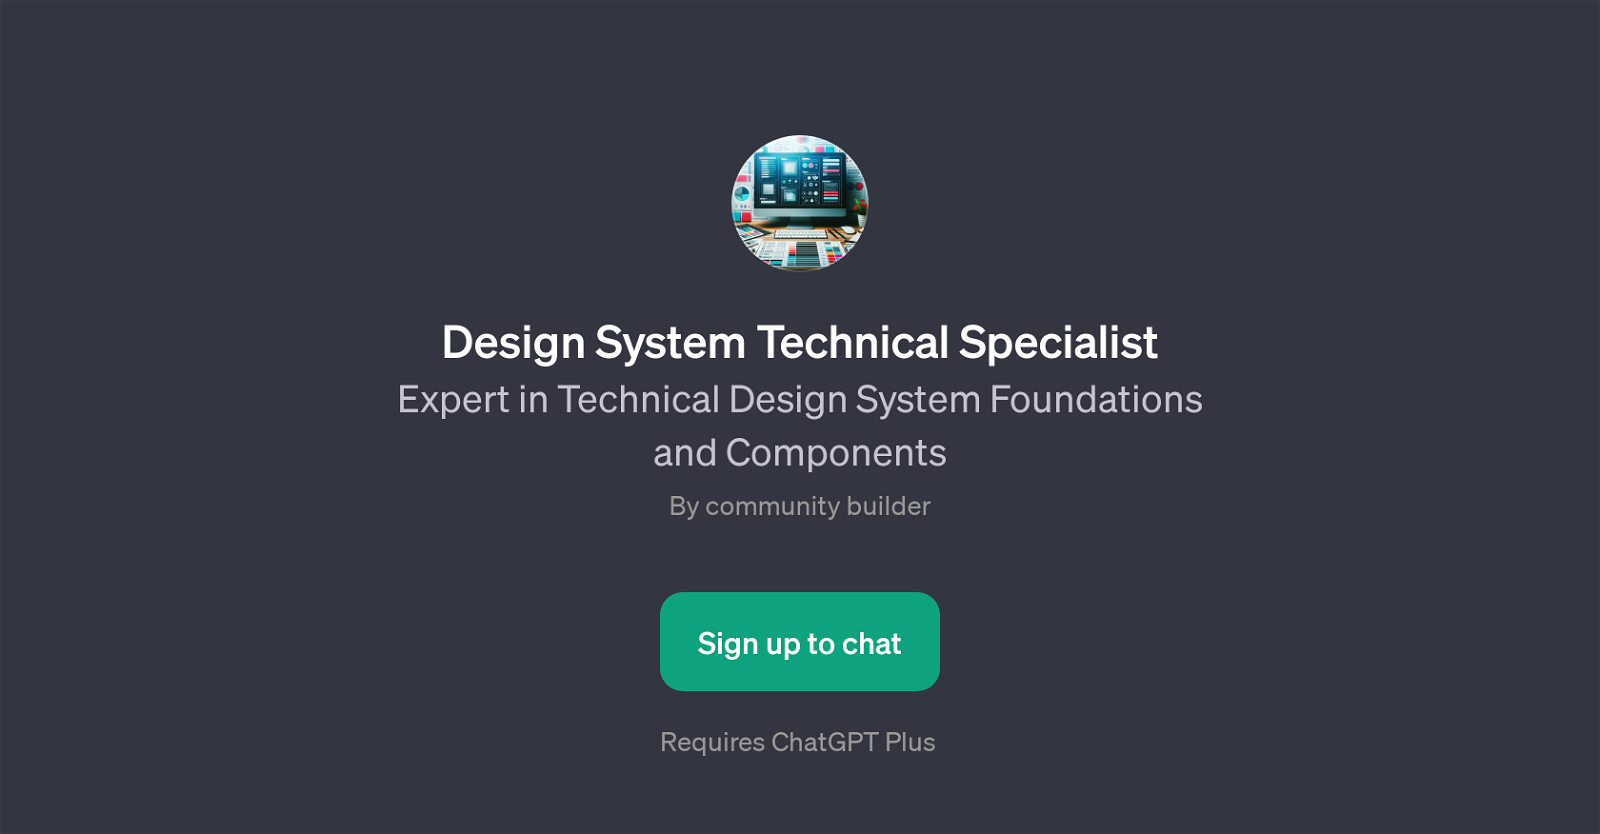 Design System Technical Specialist website